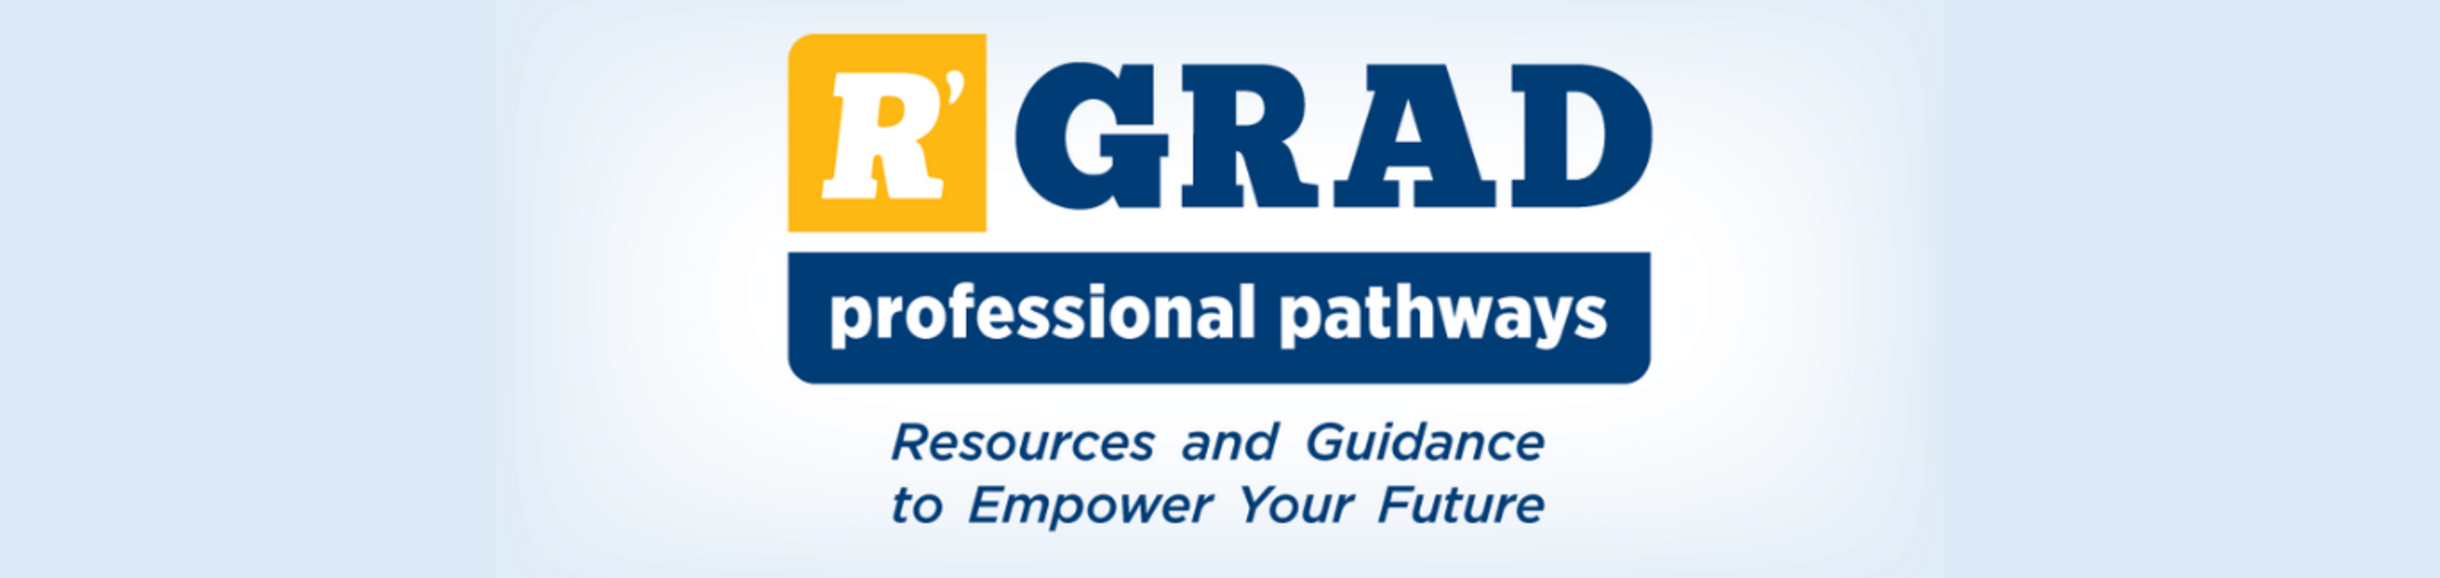 R"Grad Professional Pathways